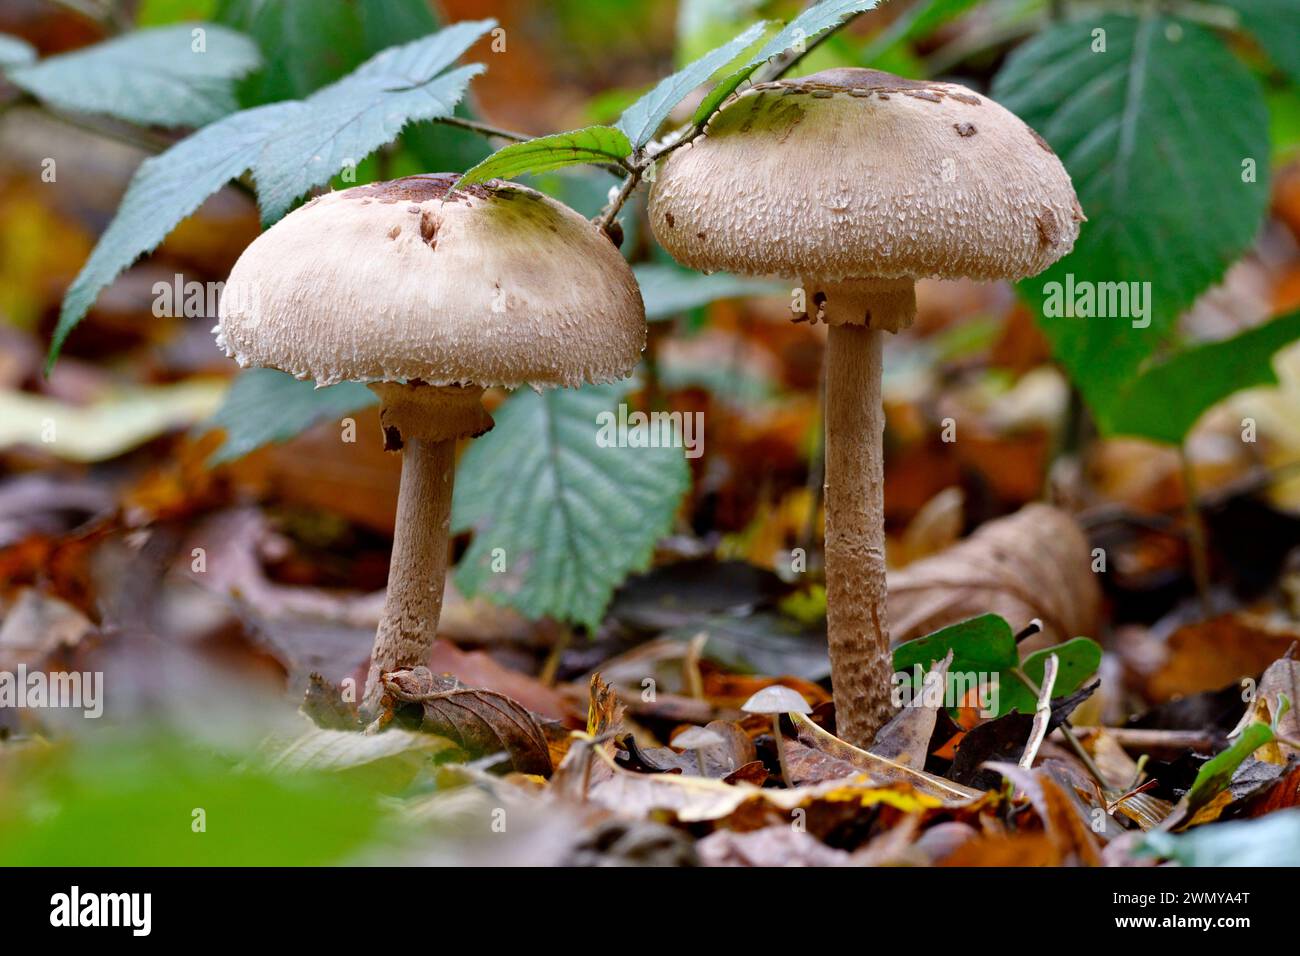 France, Doubs, mushrooms, Macrolepiota gracilenta Stock Photo